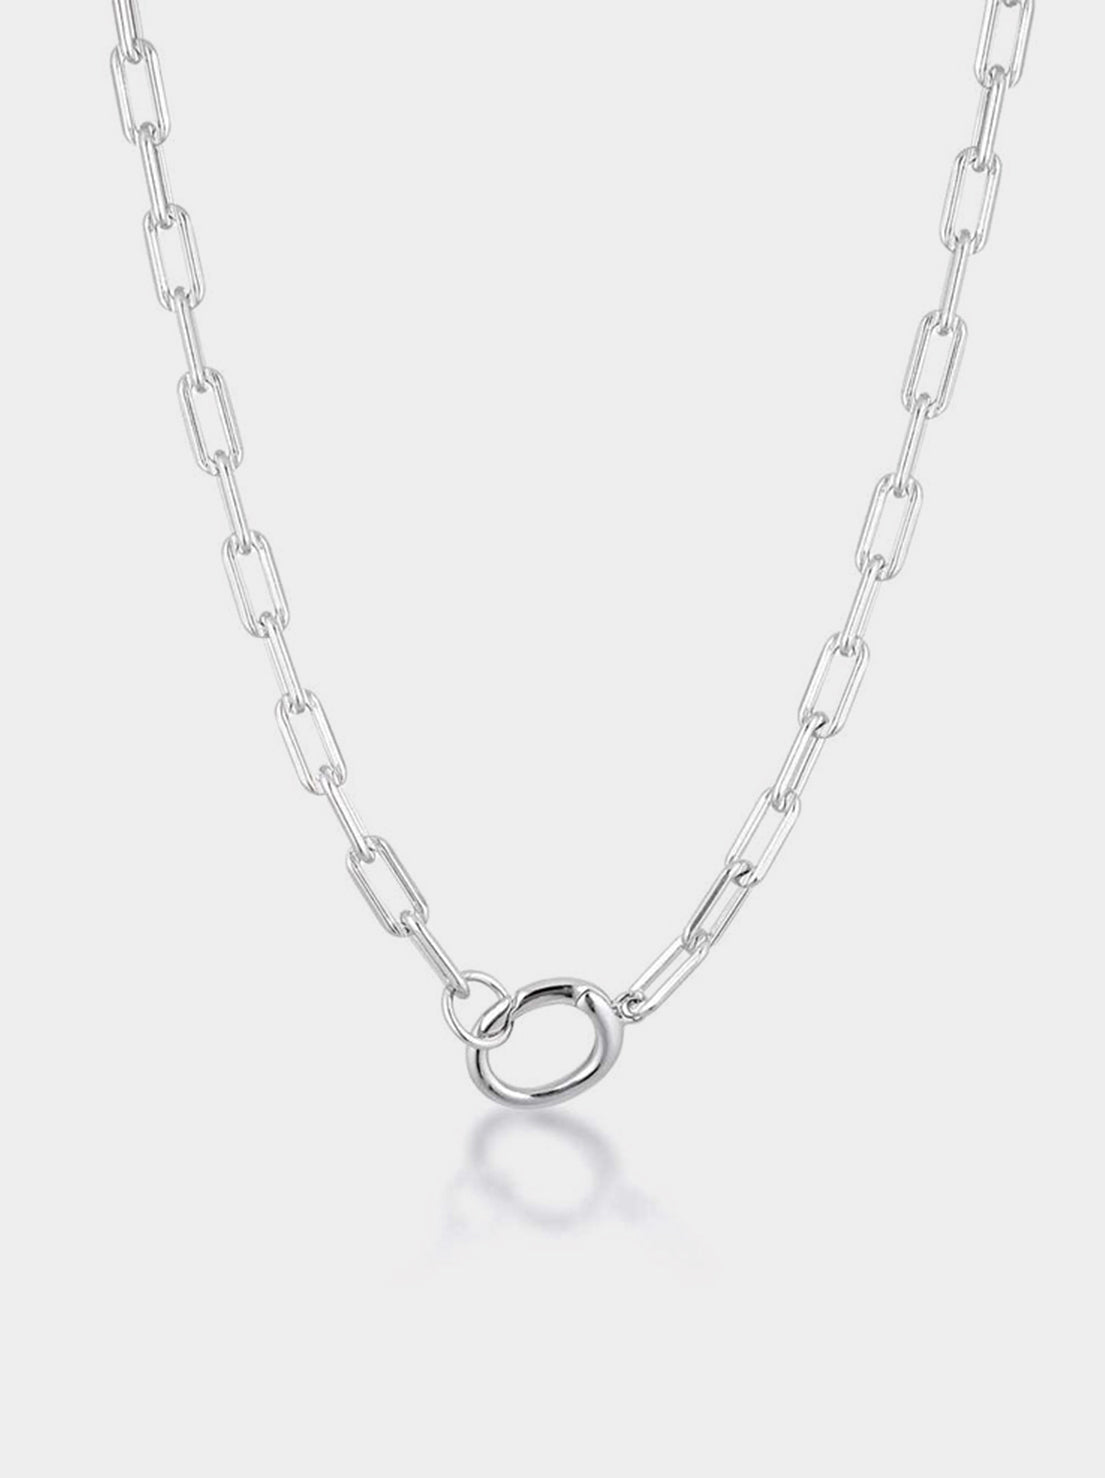 Linda Tahija - Paperclip Necklace - Sterling Silver